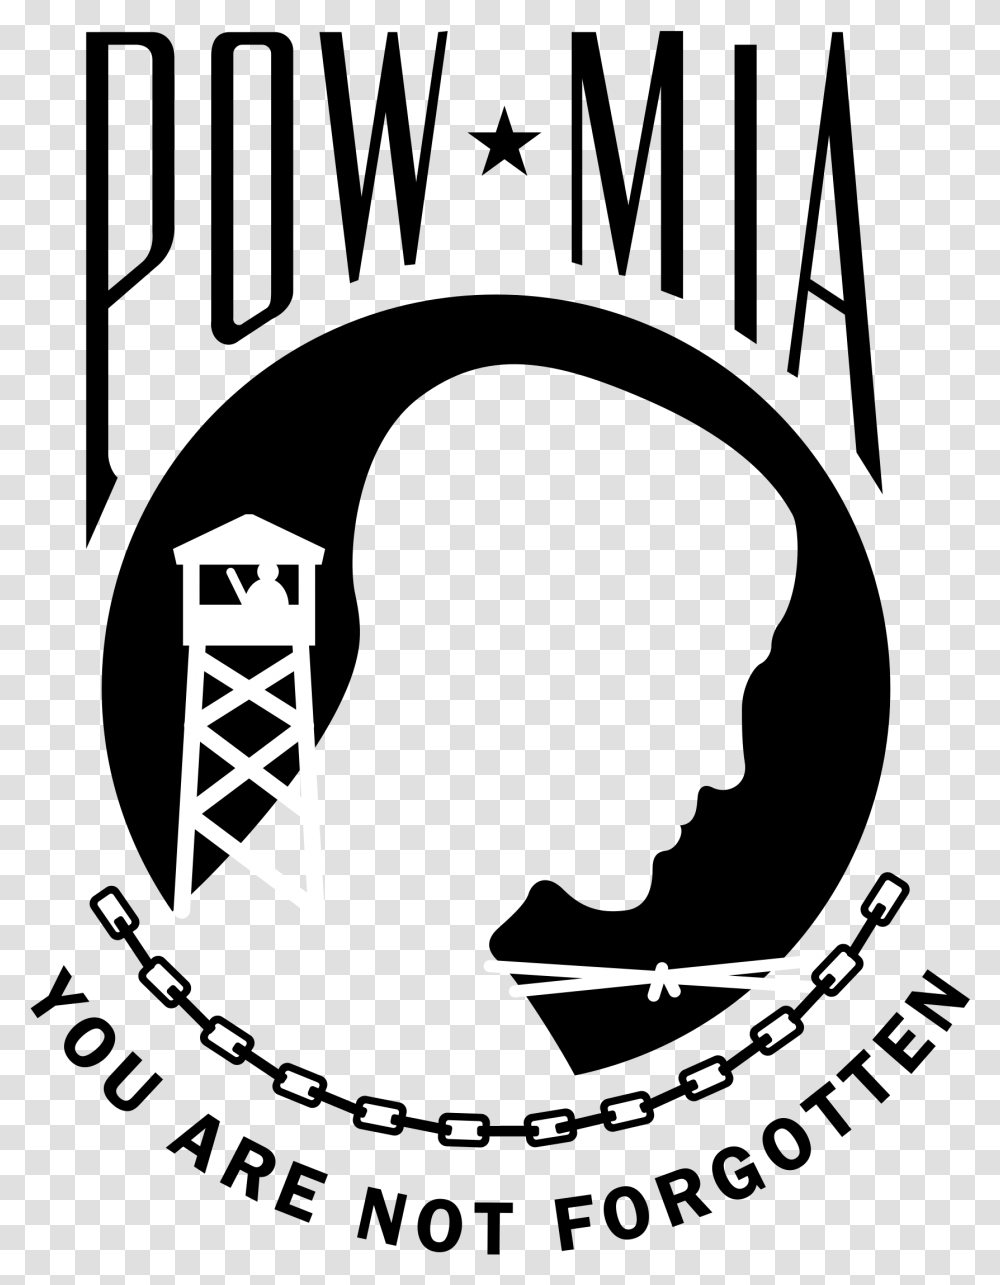 Pow Mia Logo Hd Pow Mia You Are Not Forgotten Logo, Airplane, Vehicle, Transportation, Outdoors Transparent Png